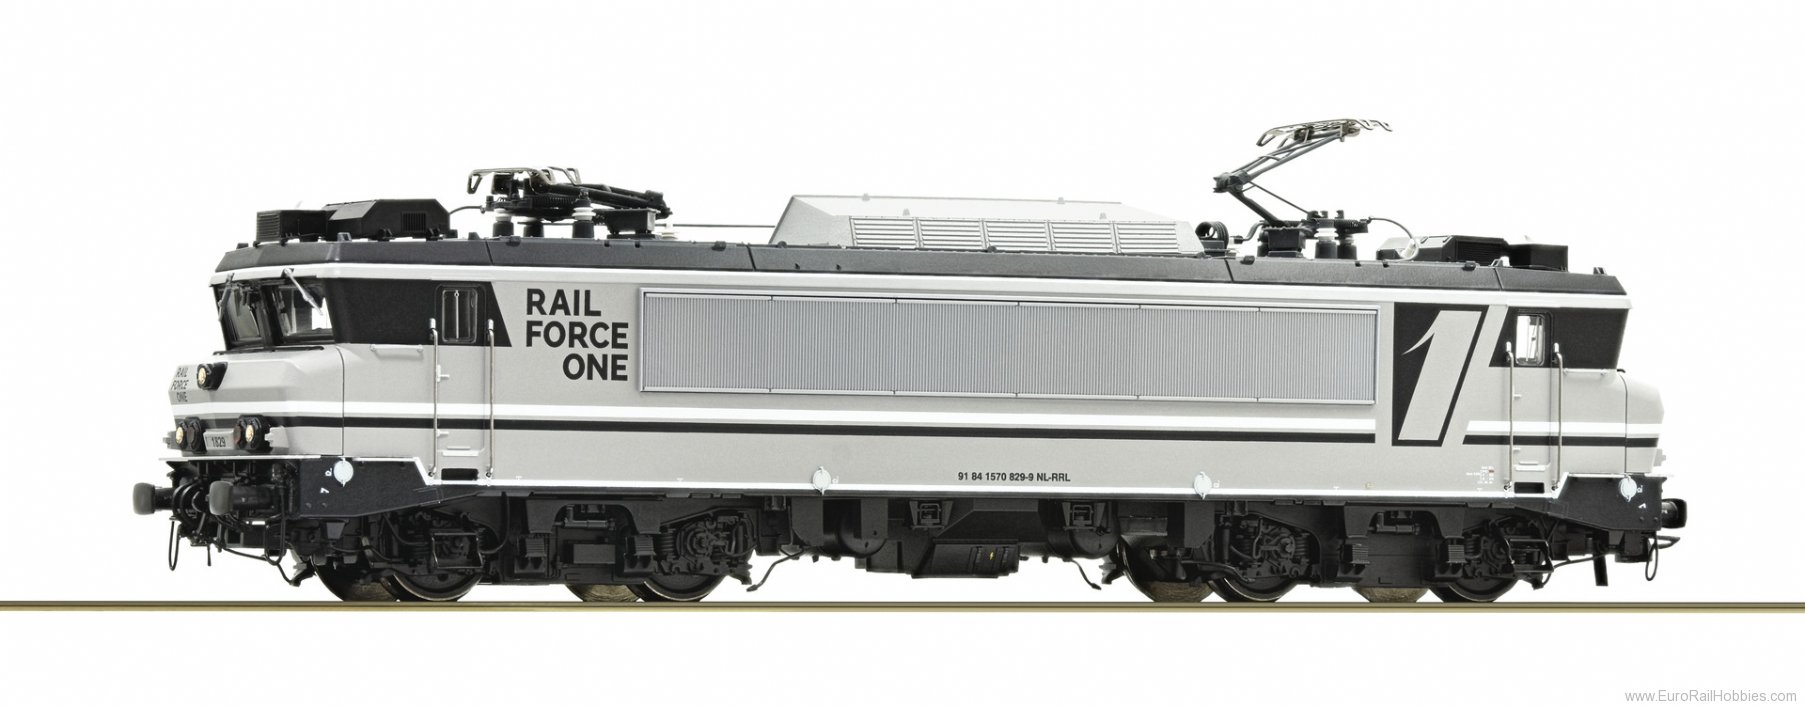 Roco 78164 Electric locomotive 1829, Rail Force One  (Ma